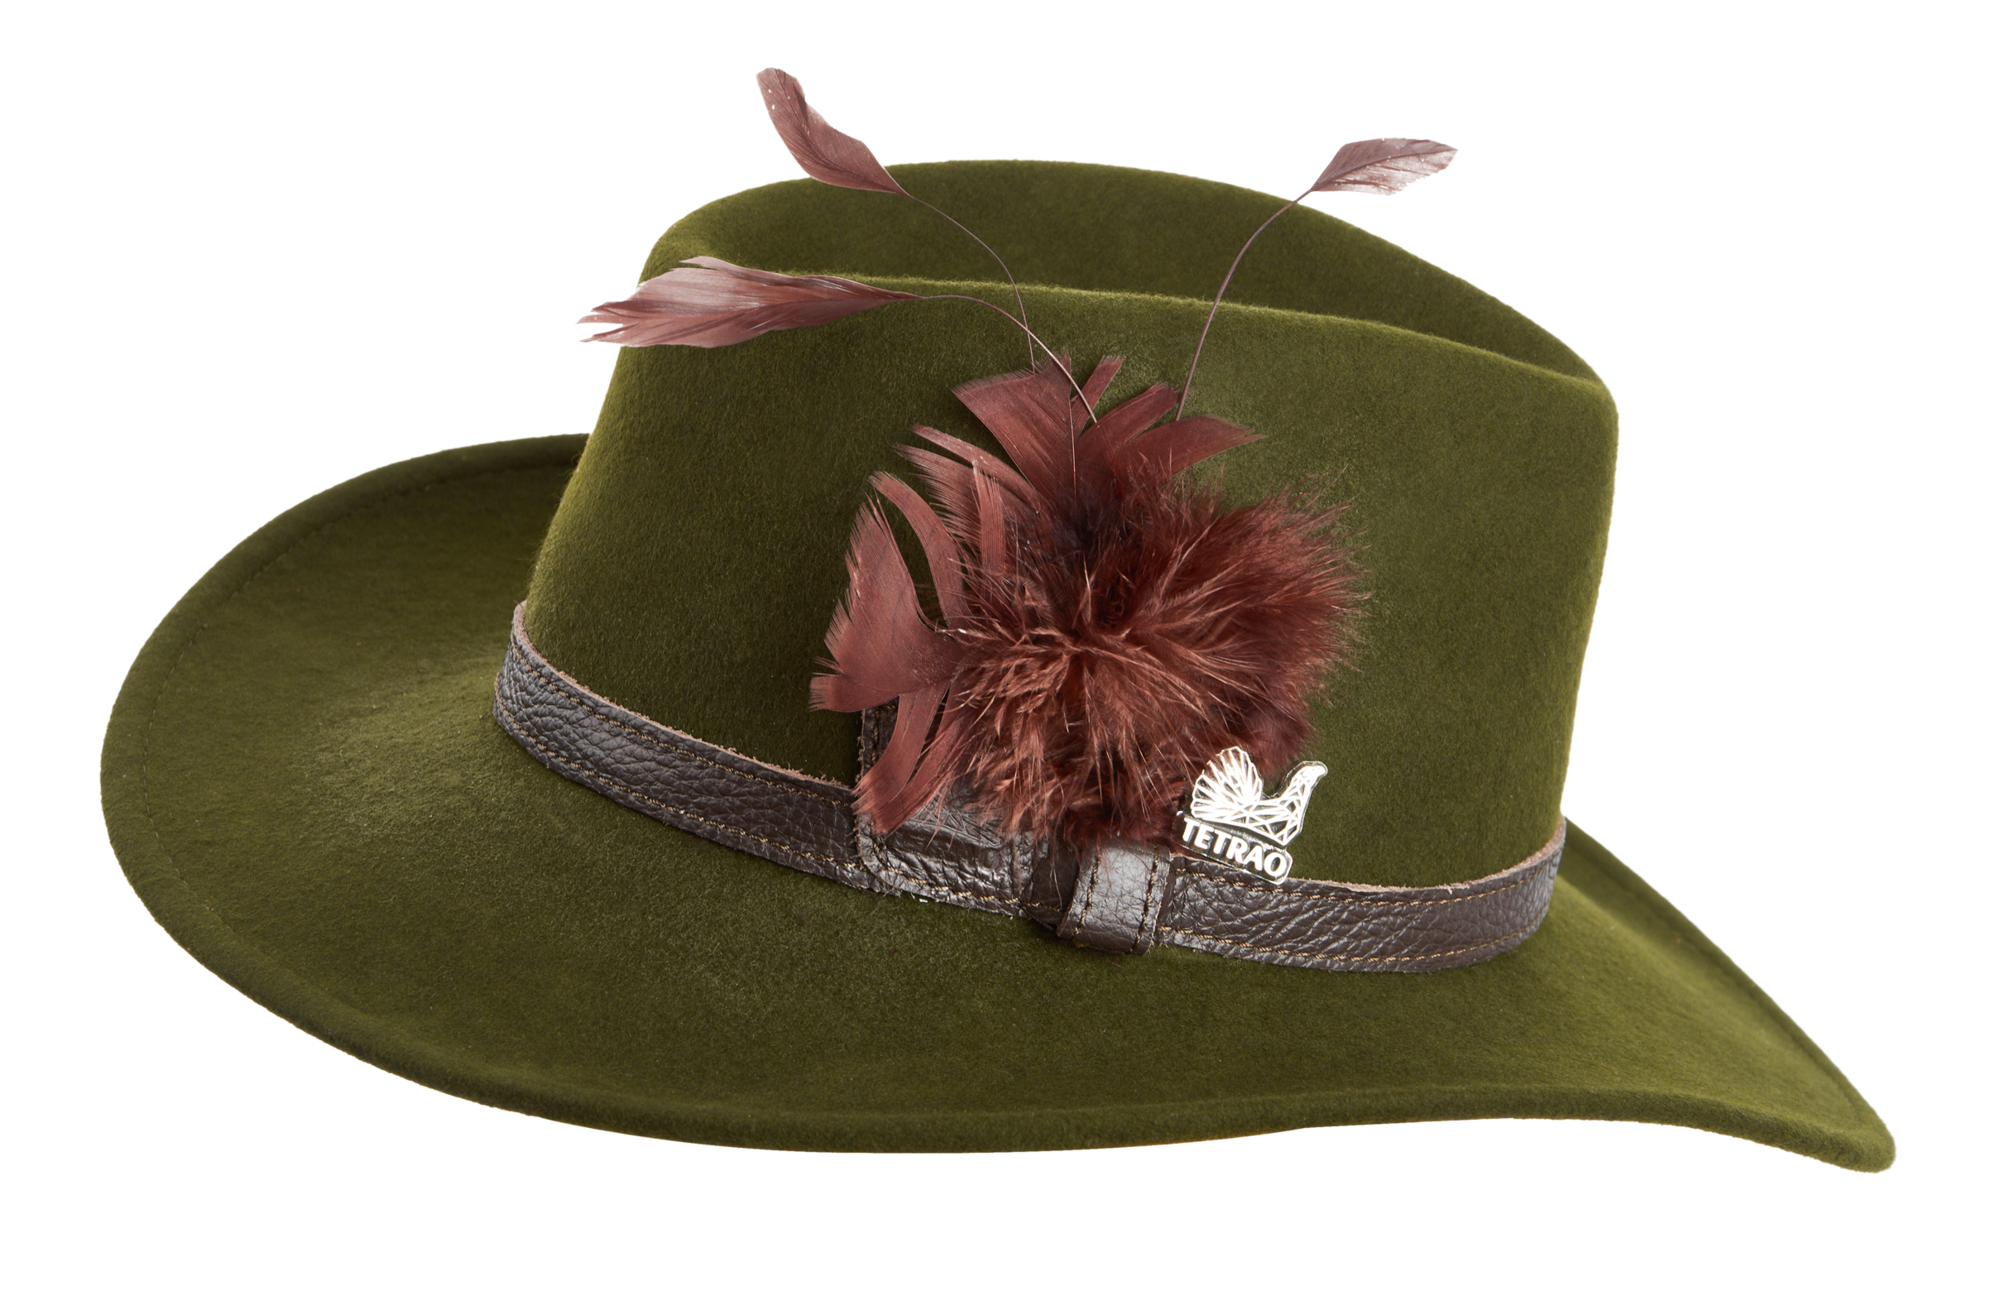 Dámsky poľovnícky klobúk TETRAO - s hnedým remienkom zelený 56  